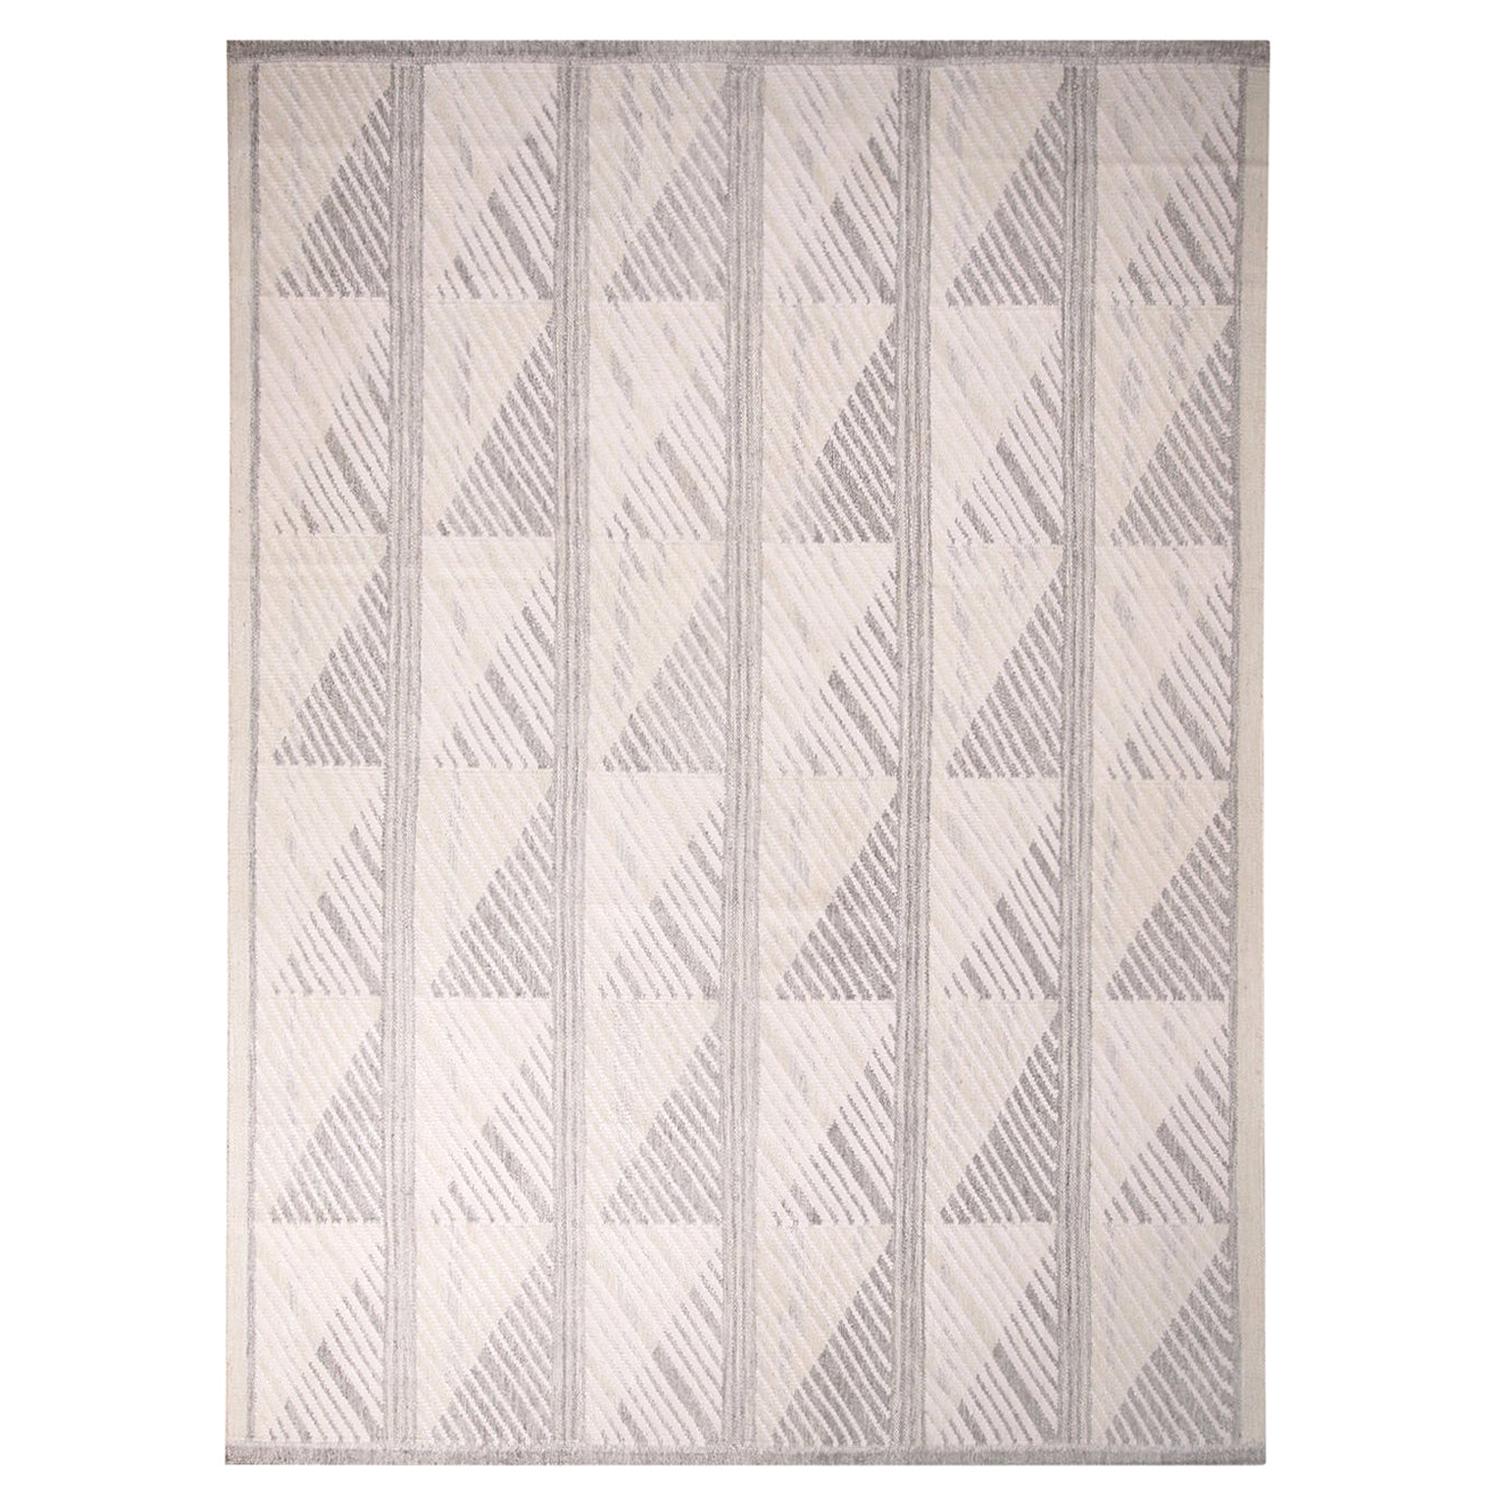 Rug & Kilim’s Scandinavian-Inspired Geometric Gray-White Natural Wool Kilim Rug